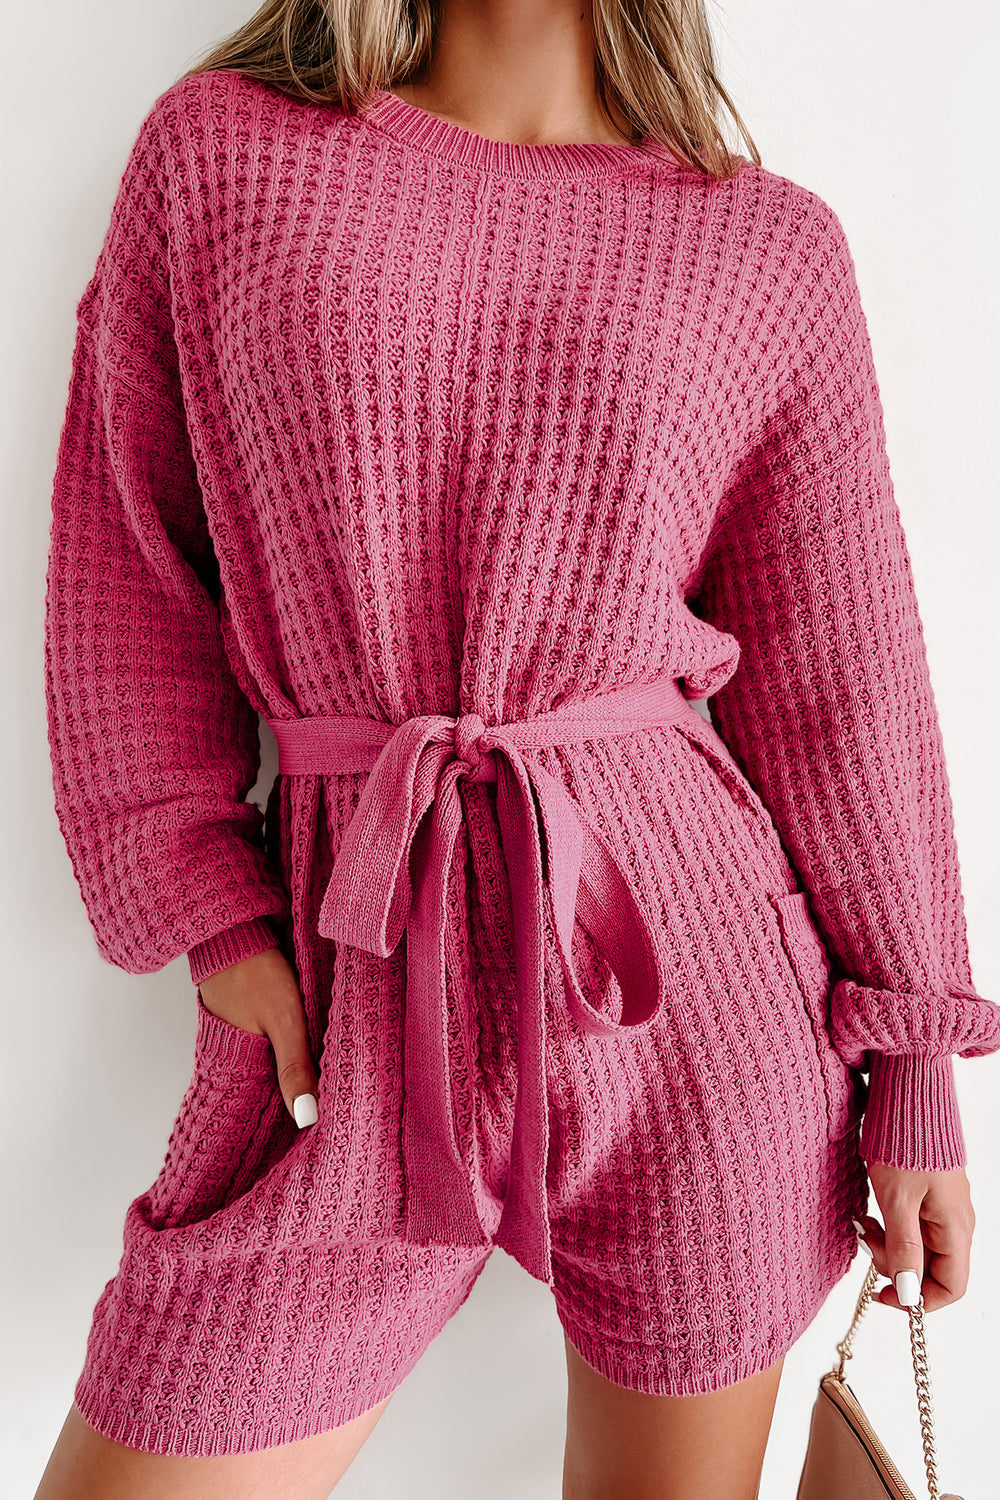 Putting My Troubles Aside Sweater Knit Romper (Berry) - NanaMacs